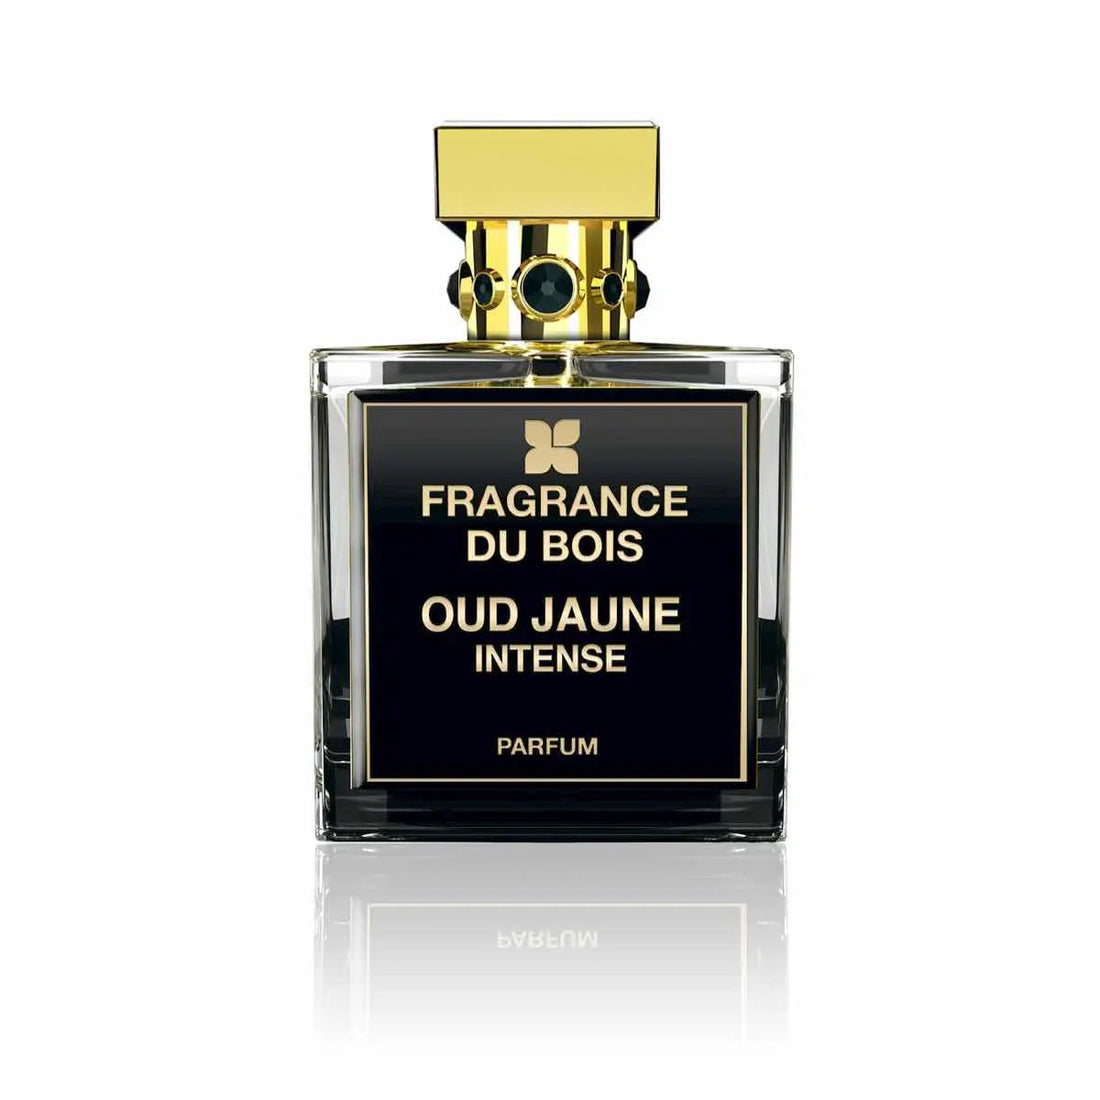 Fragrance du bois Oud Jaune Perfume intenso - 100 ml